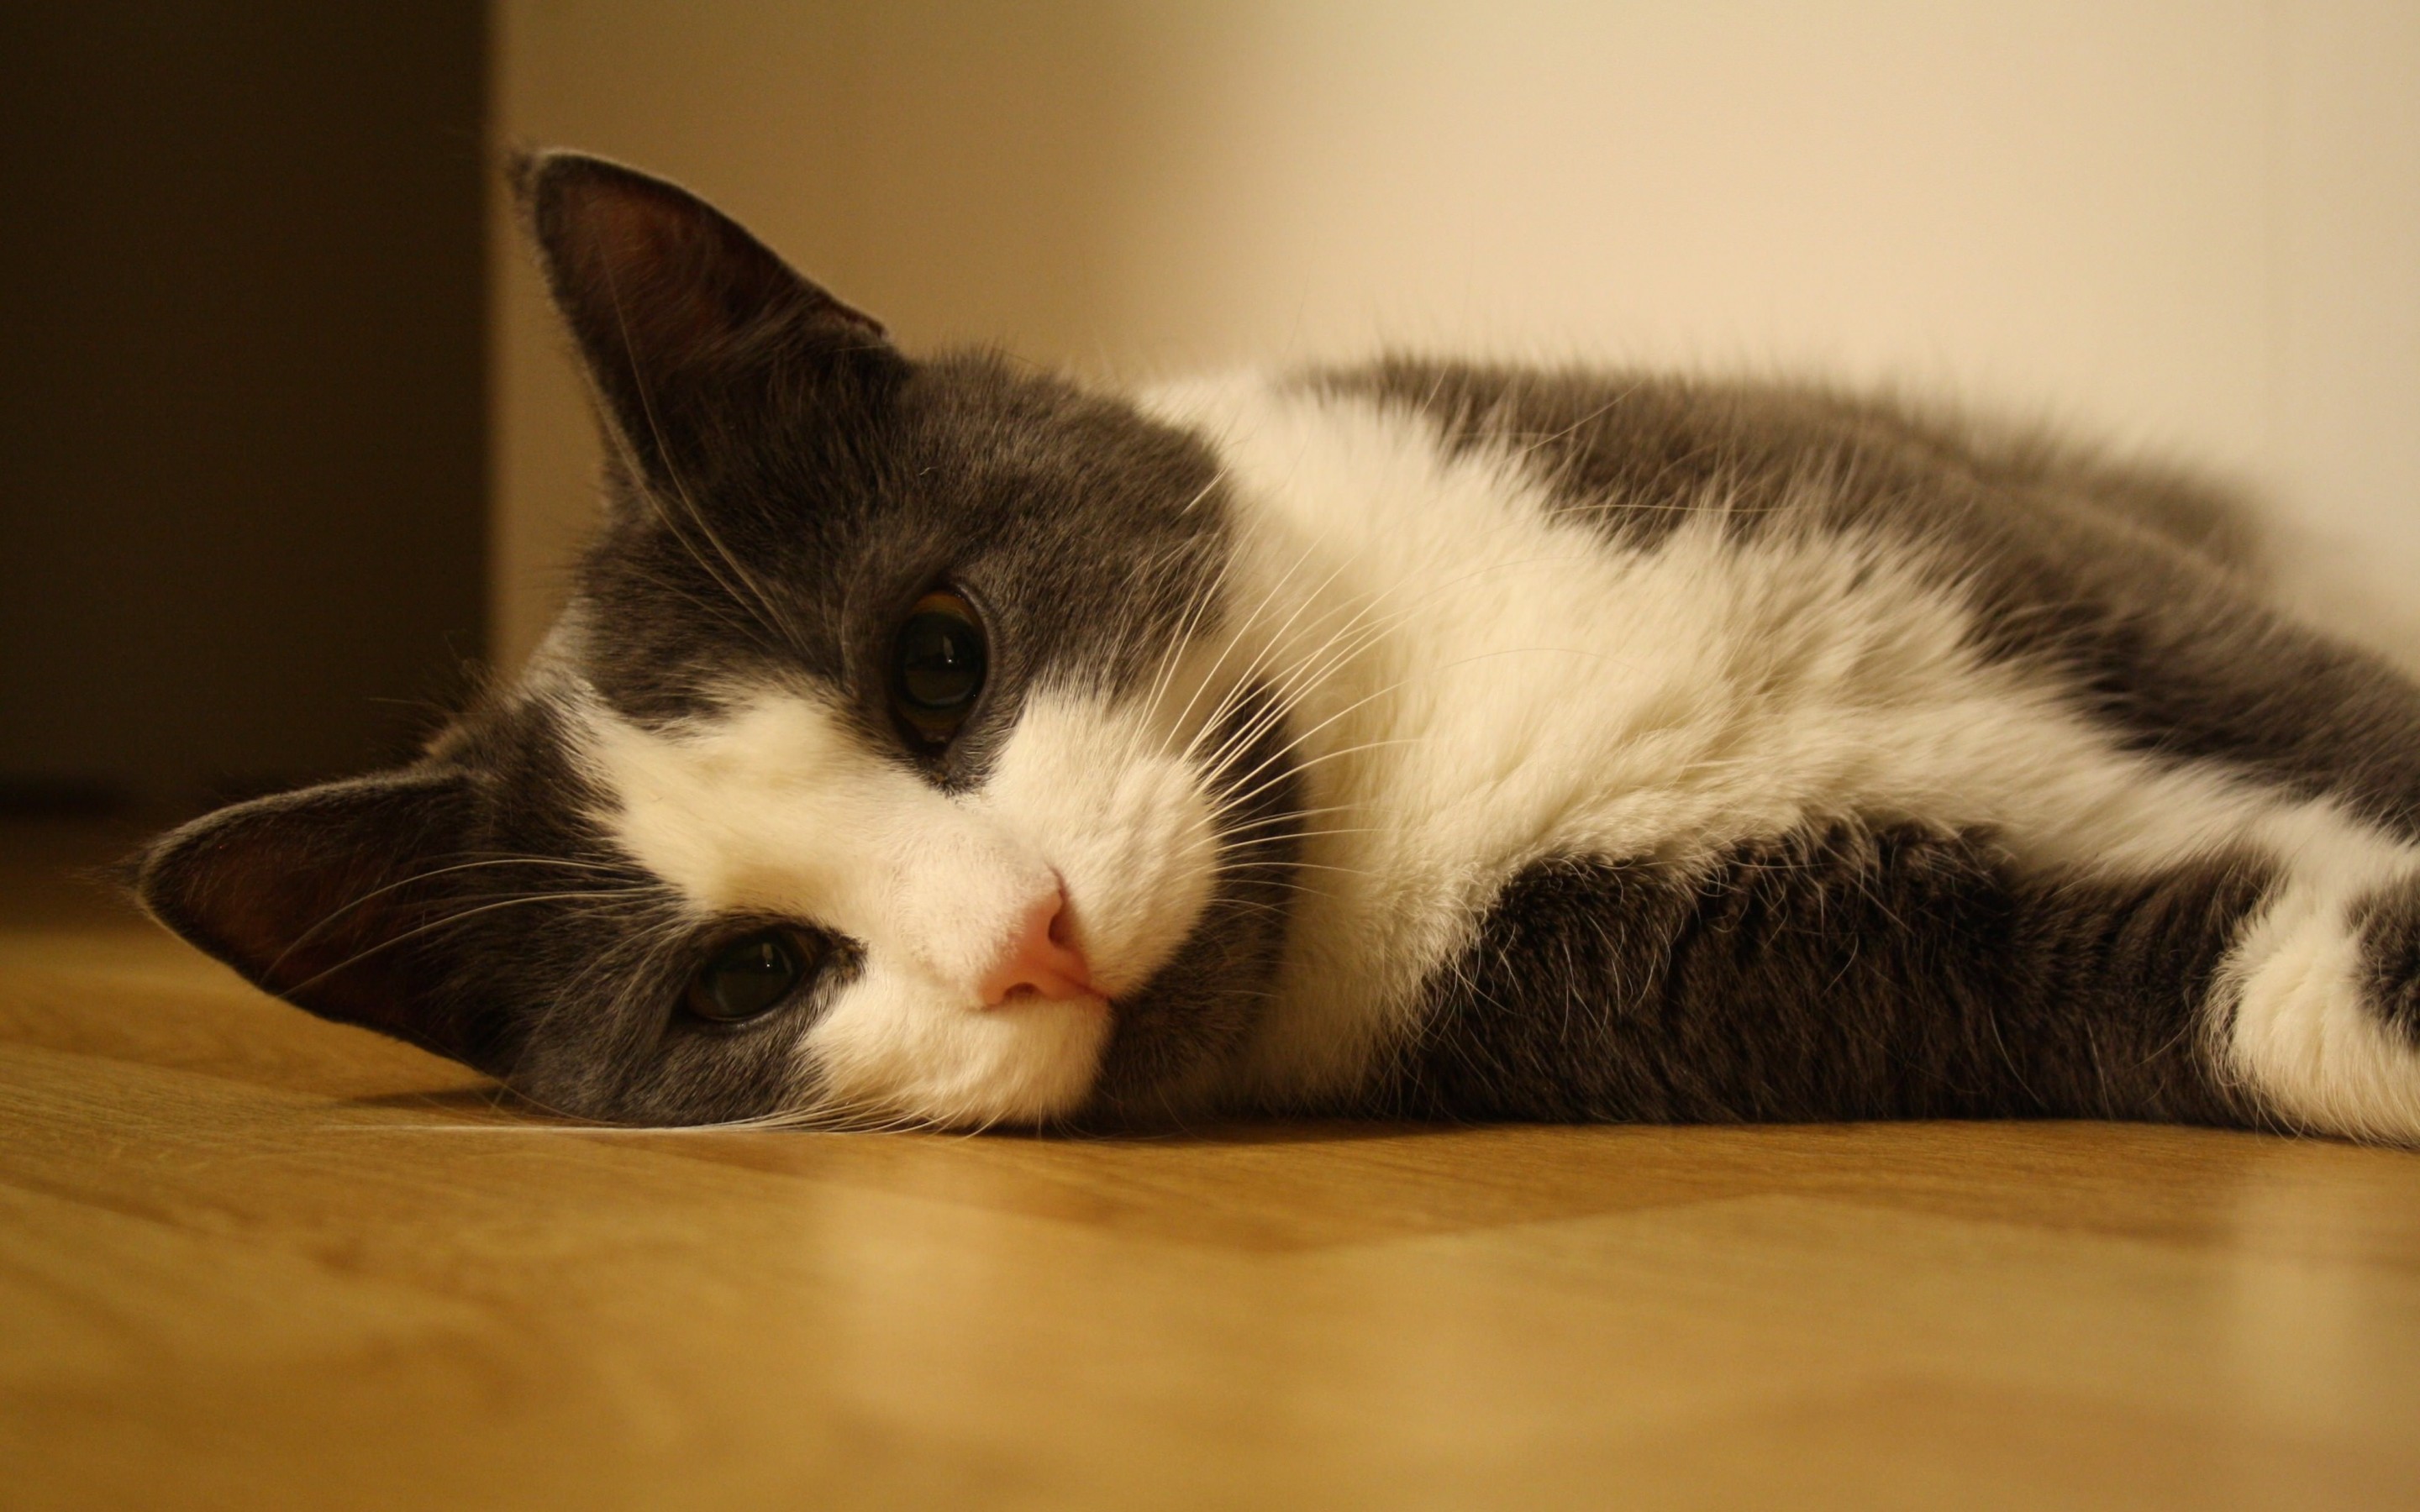 Sweet Cat Lying On The Floor Wallpaper for Desktop 2880x1800